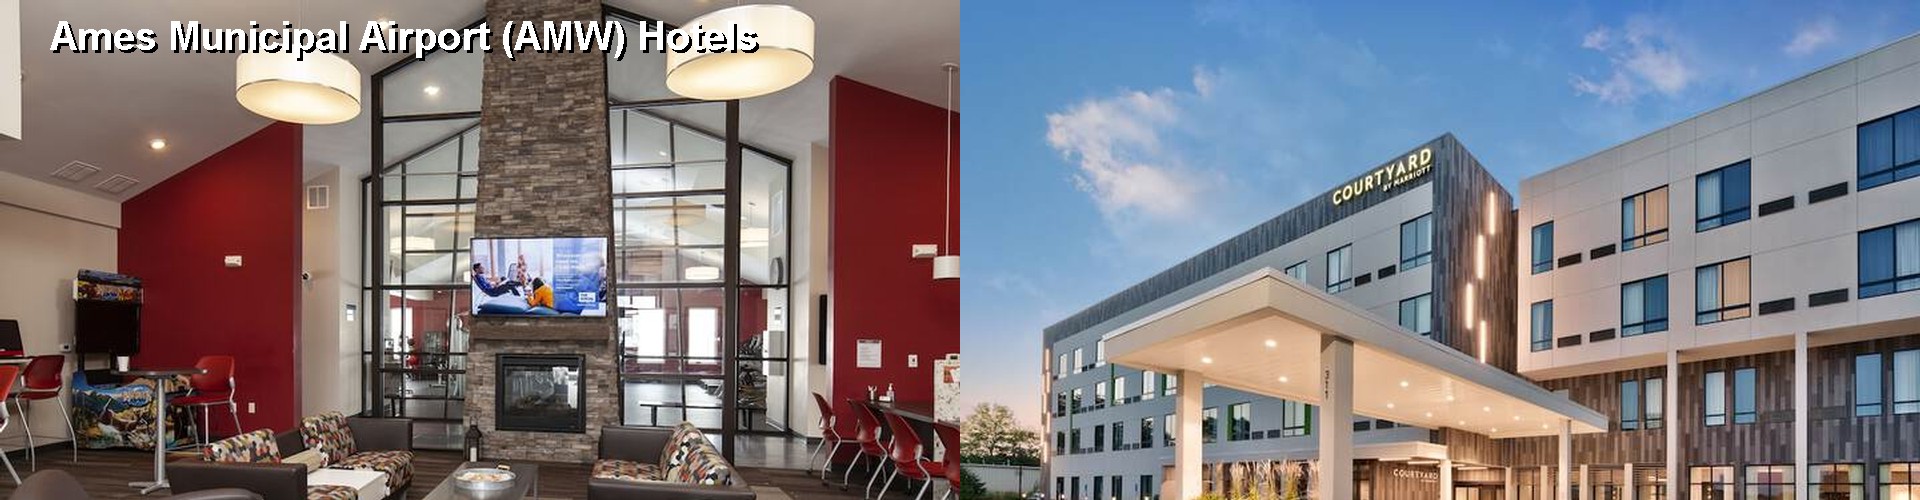 5 Best Hotels near Ames Municipal Airport (AMW)